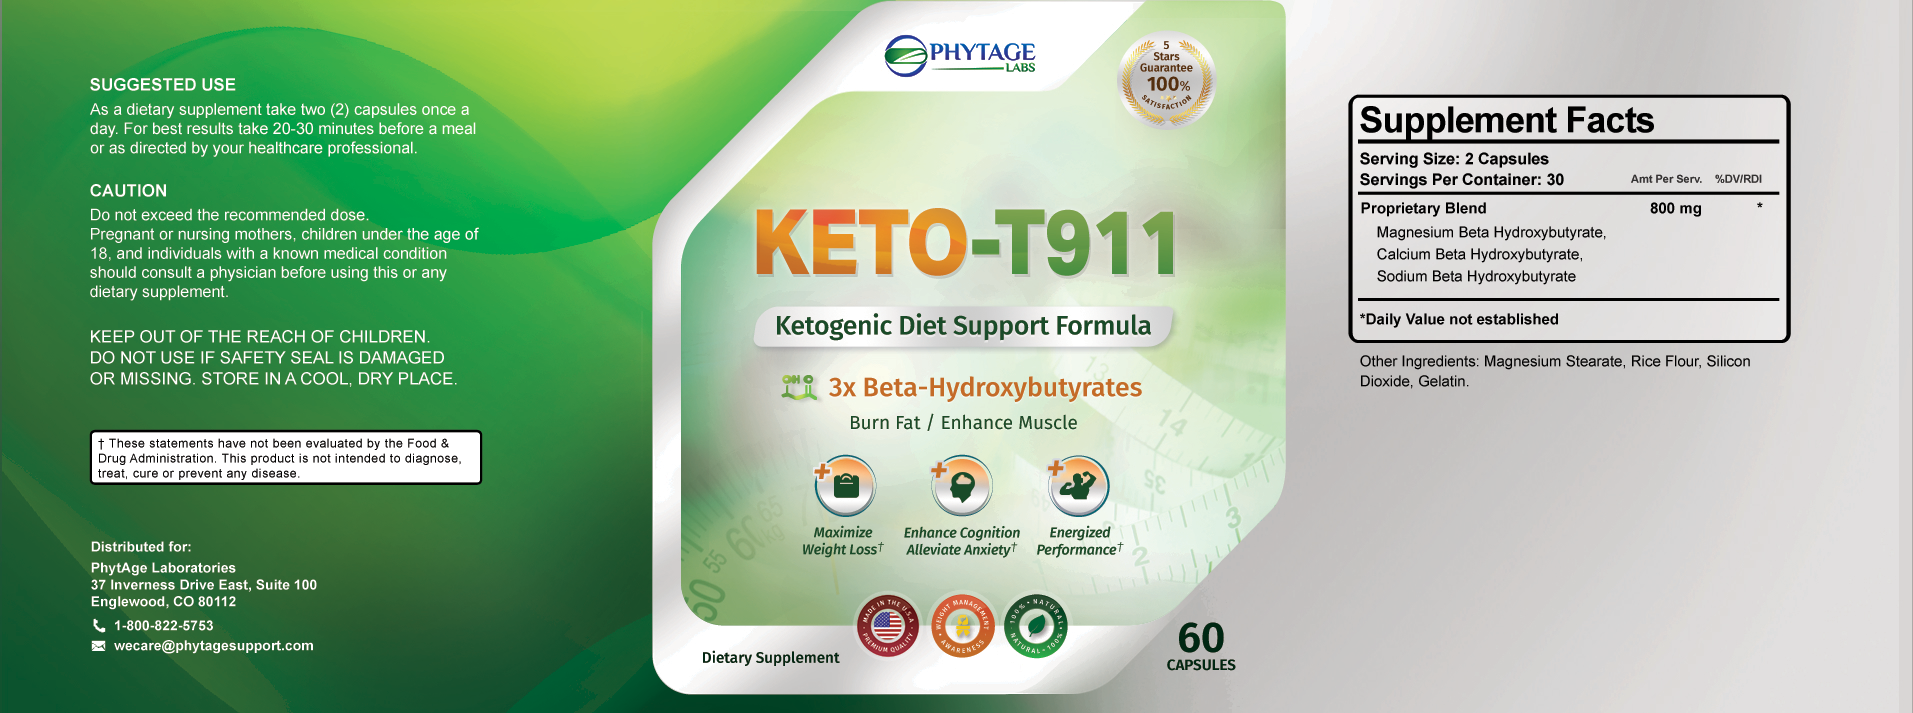 Keto-T911 Ingredients Label